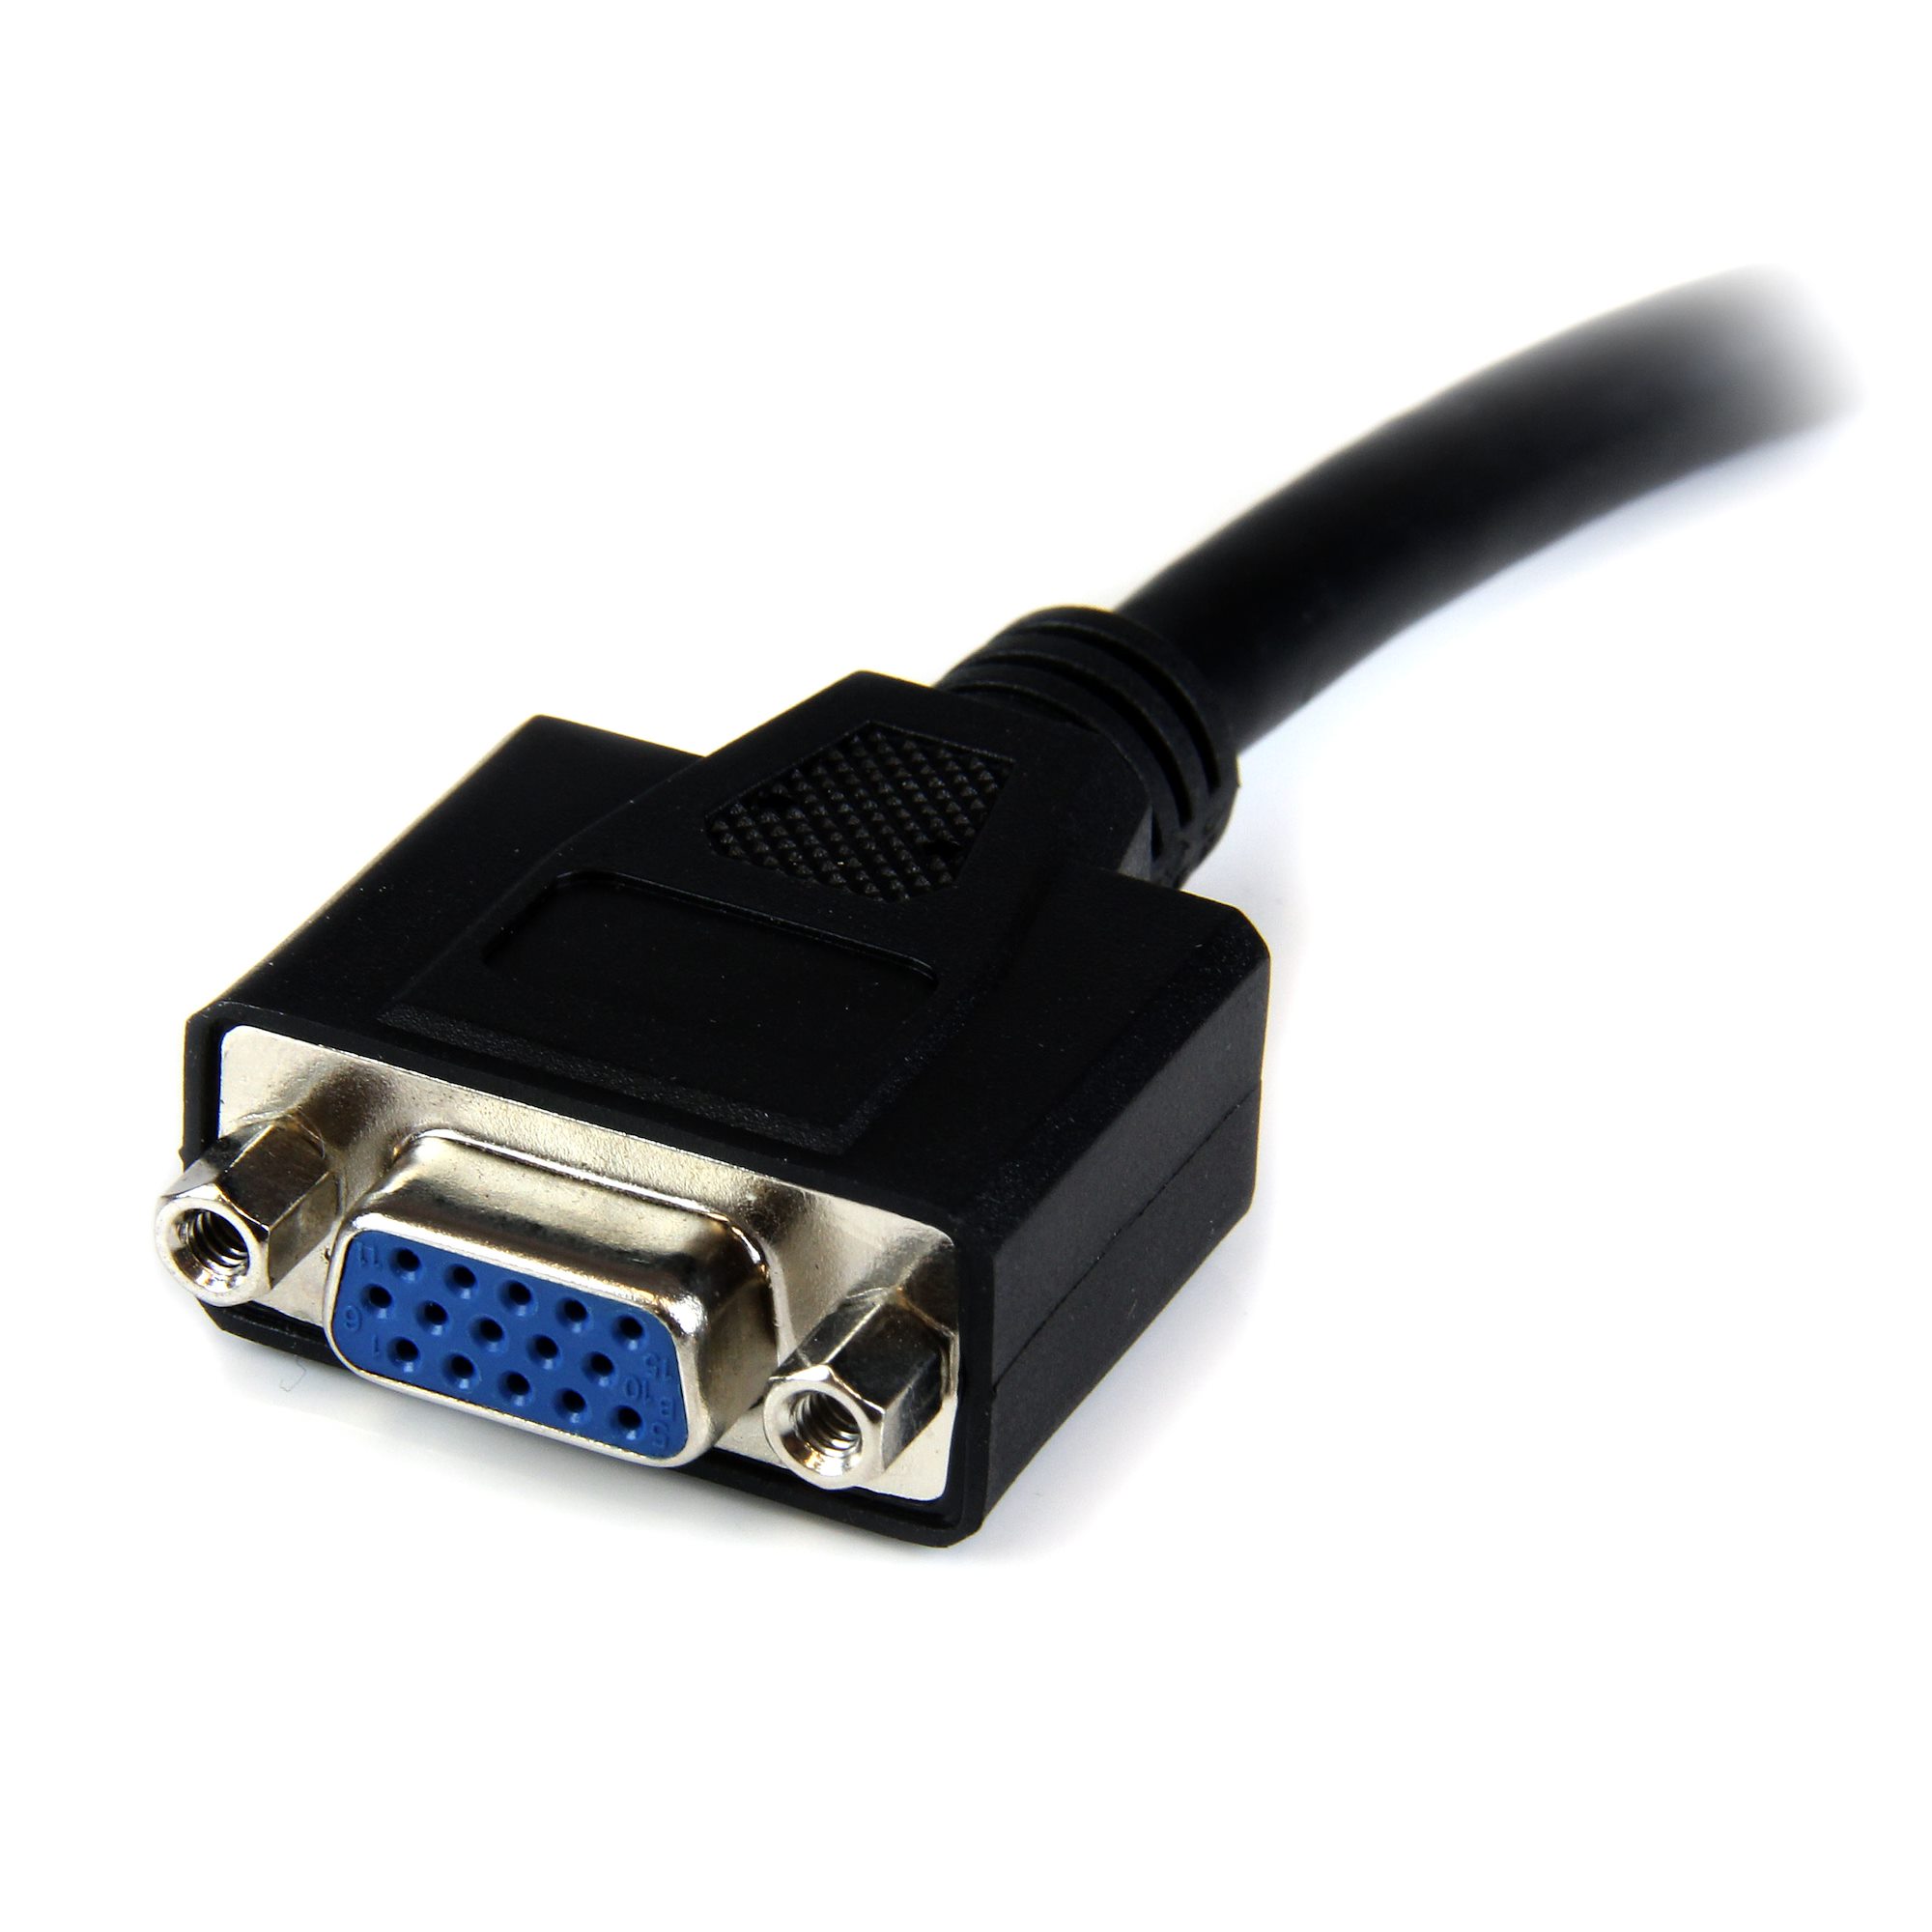 8in DVI to VGA Cable Adapter - DVI-I Male to VGA Female